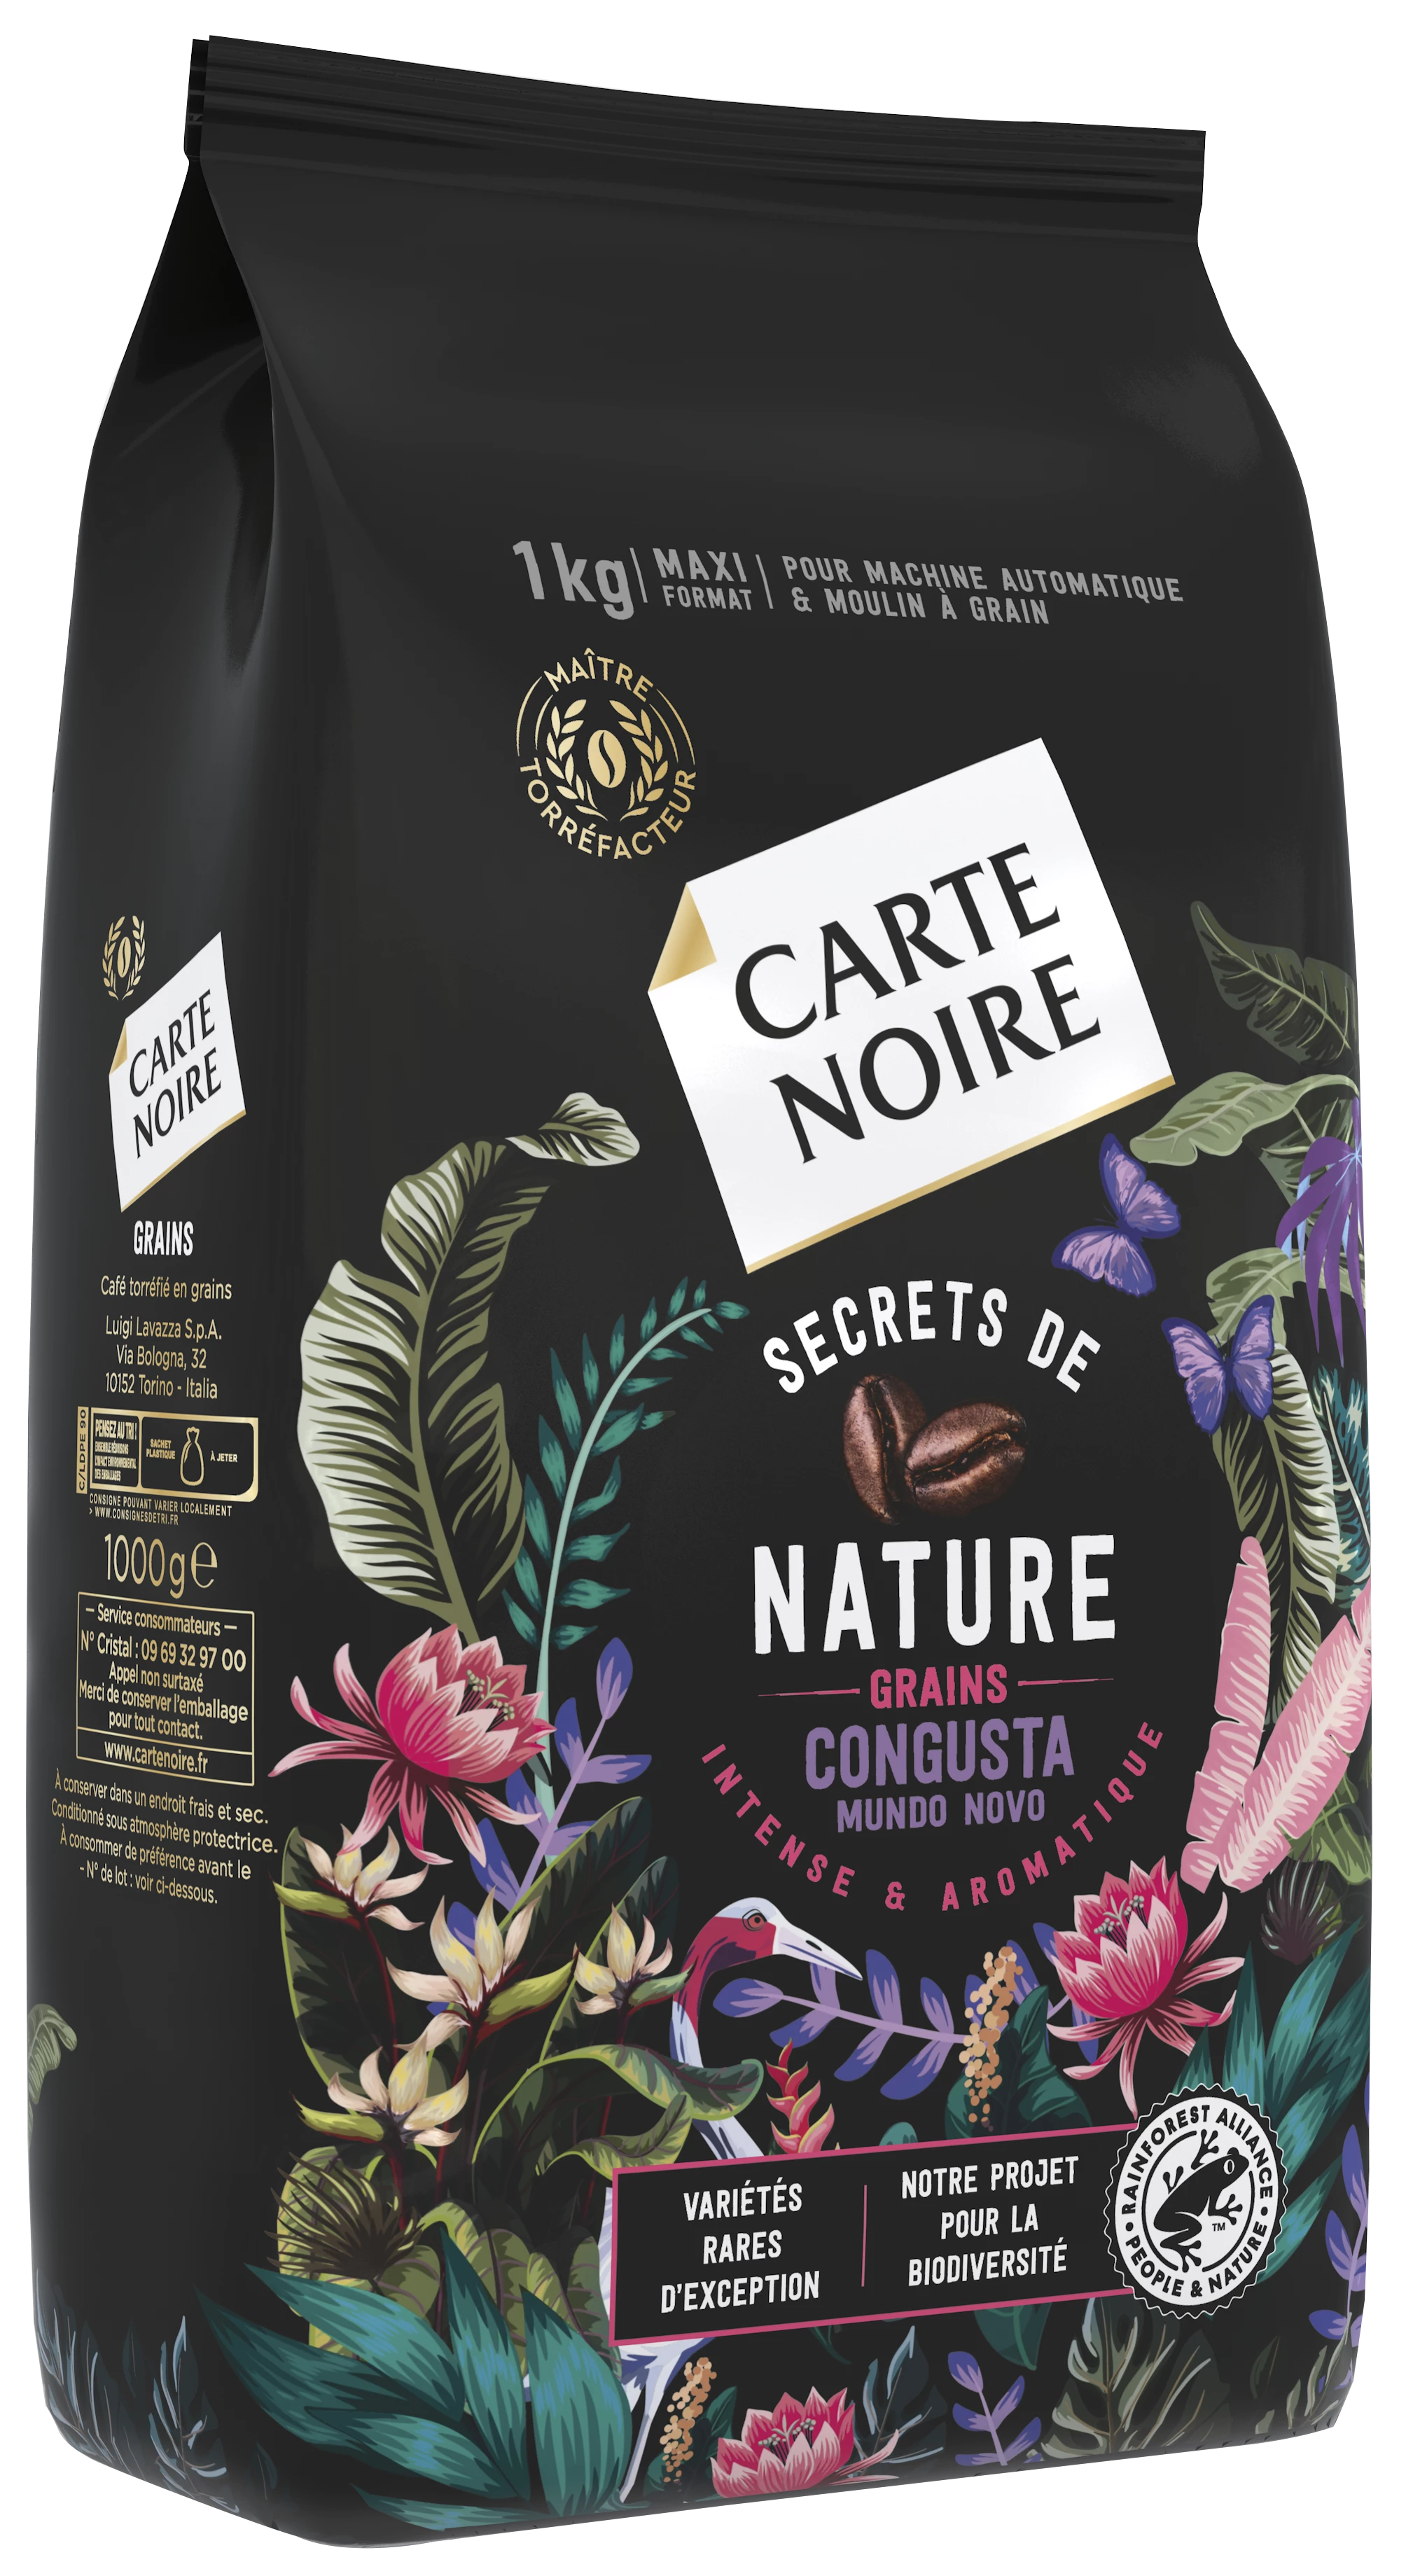 Congusta Intense & Aromatic coffee beans; 1kg bag - CARTE NOIRE